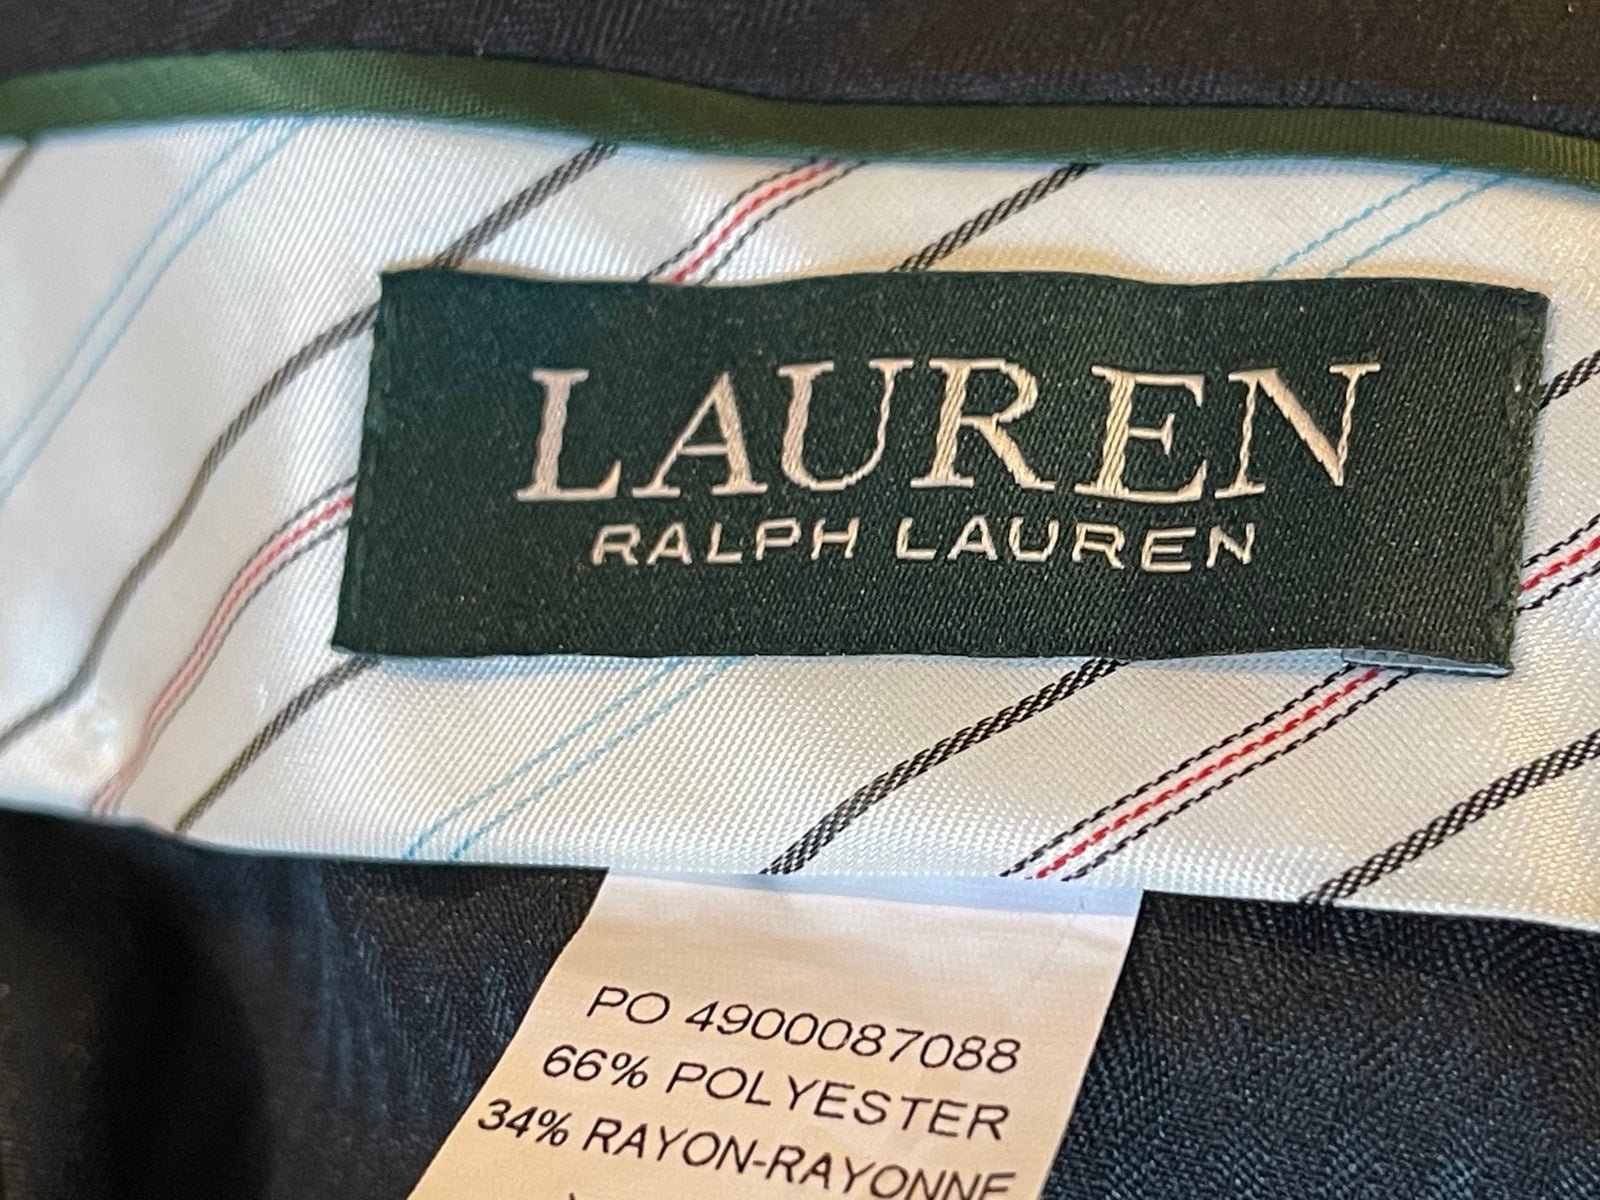 Comfortable Lauren Ralph Lauren New Plaid dress pants straight leg size 29 fzXBSUt0y Factory Price